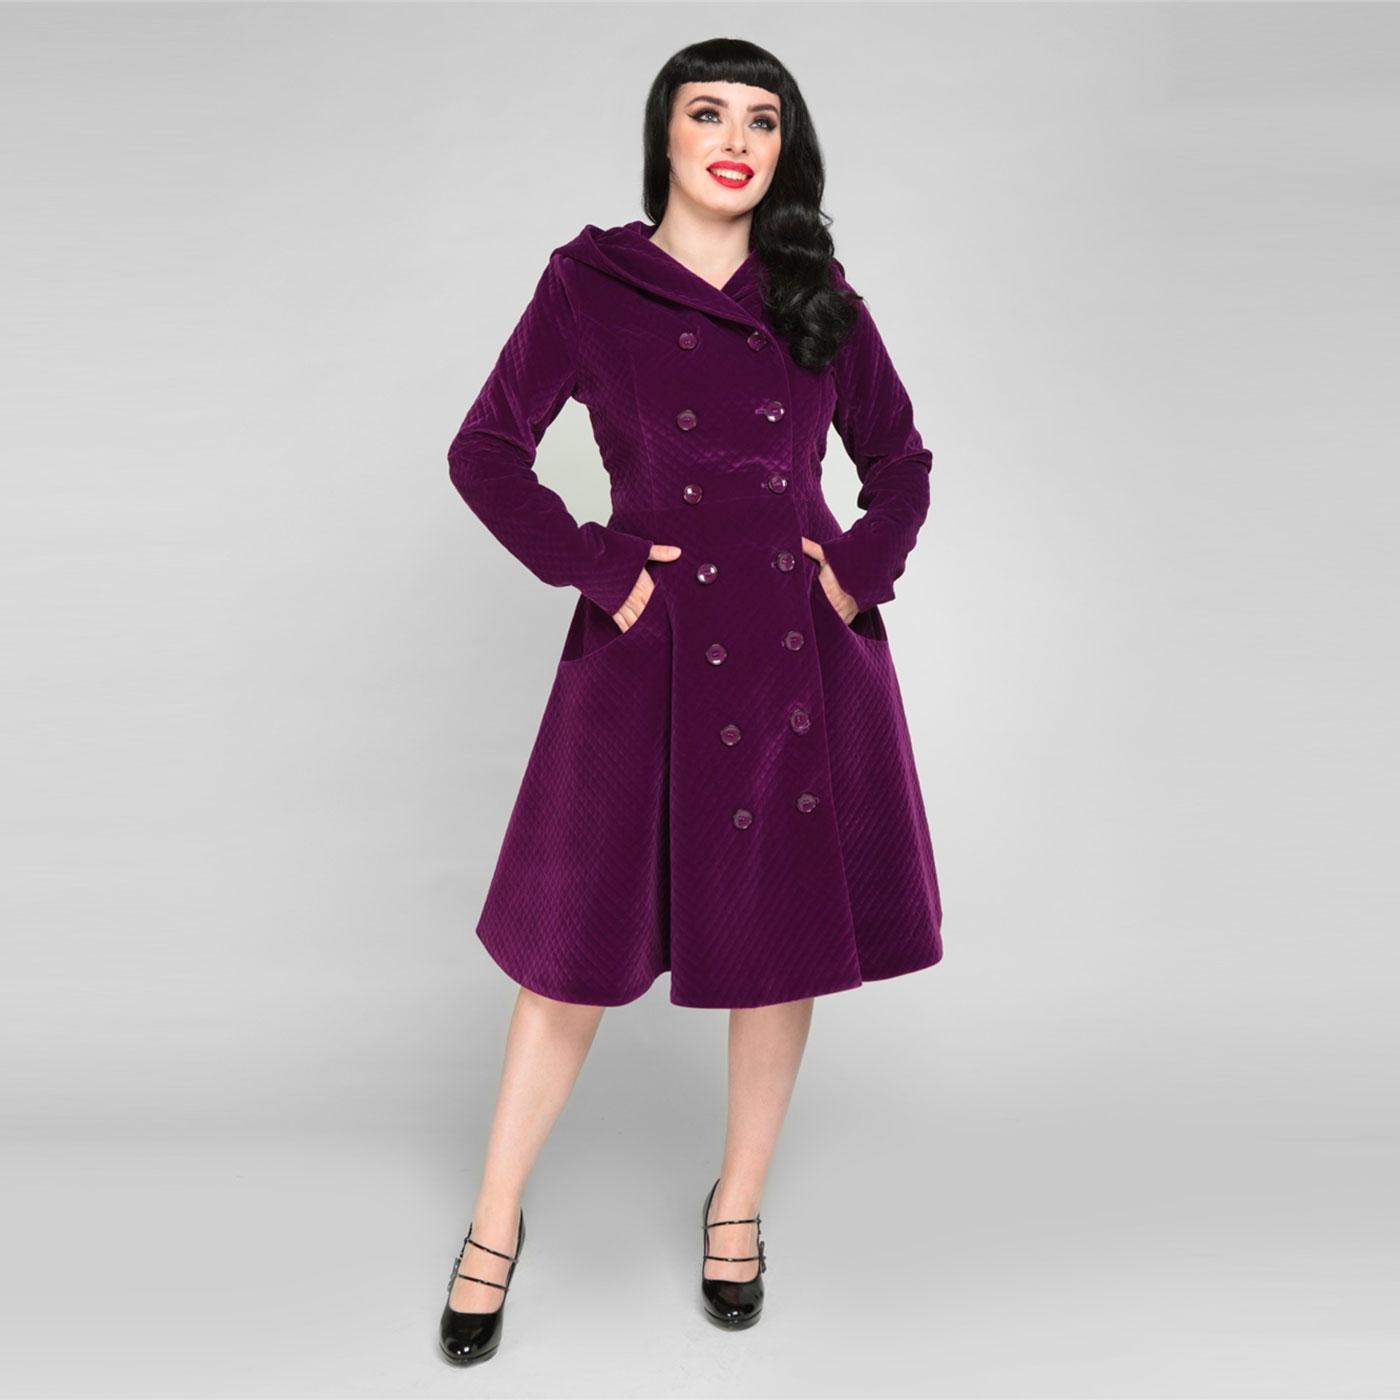 COLLECTIF Heather Hooded Quilted Velvet Swing Coat in Purple